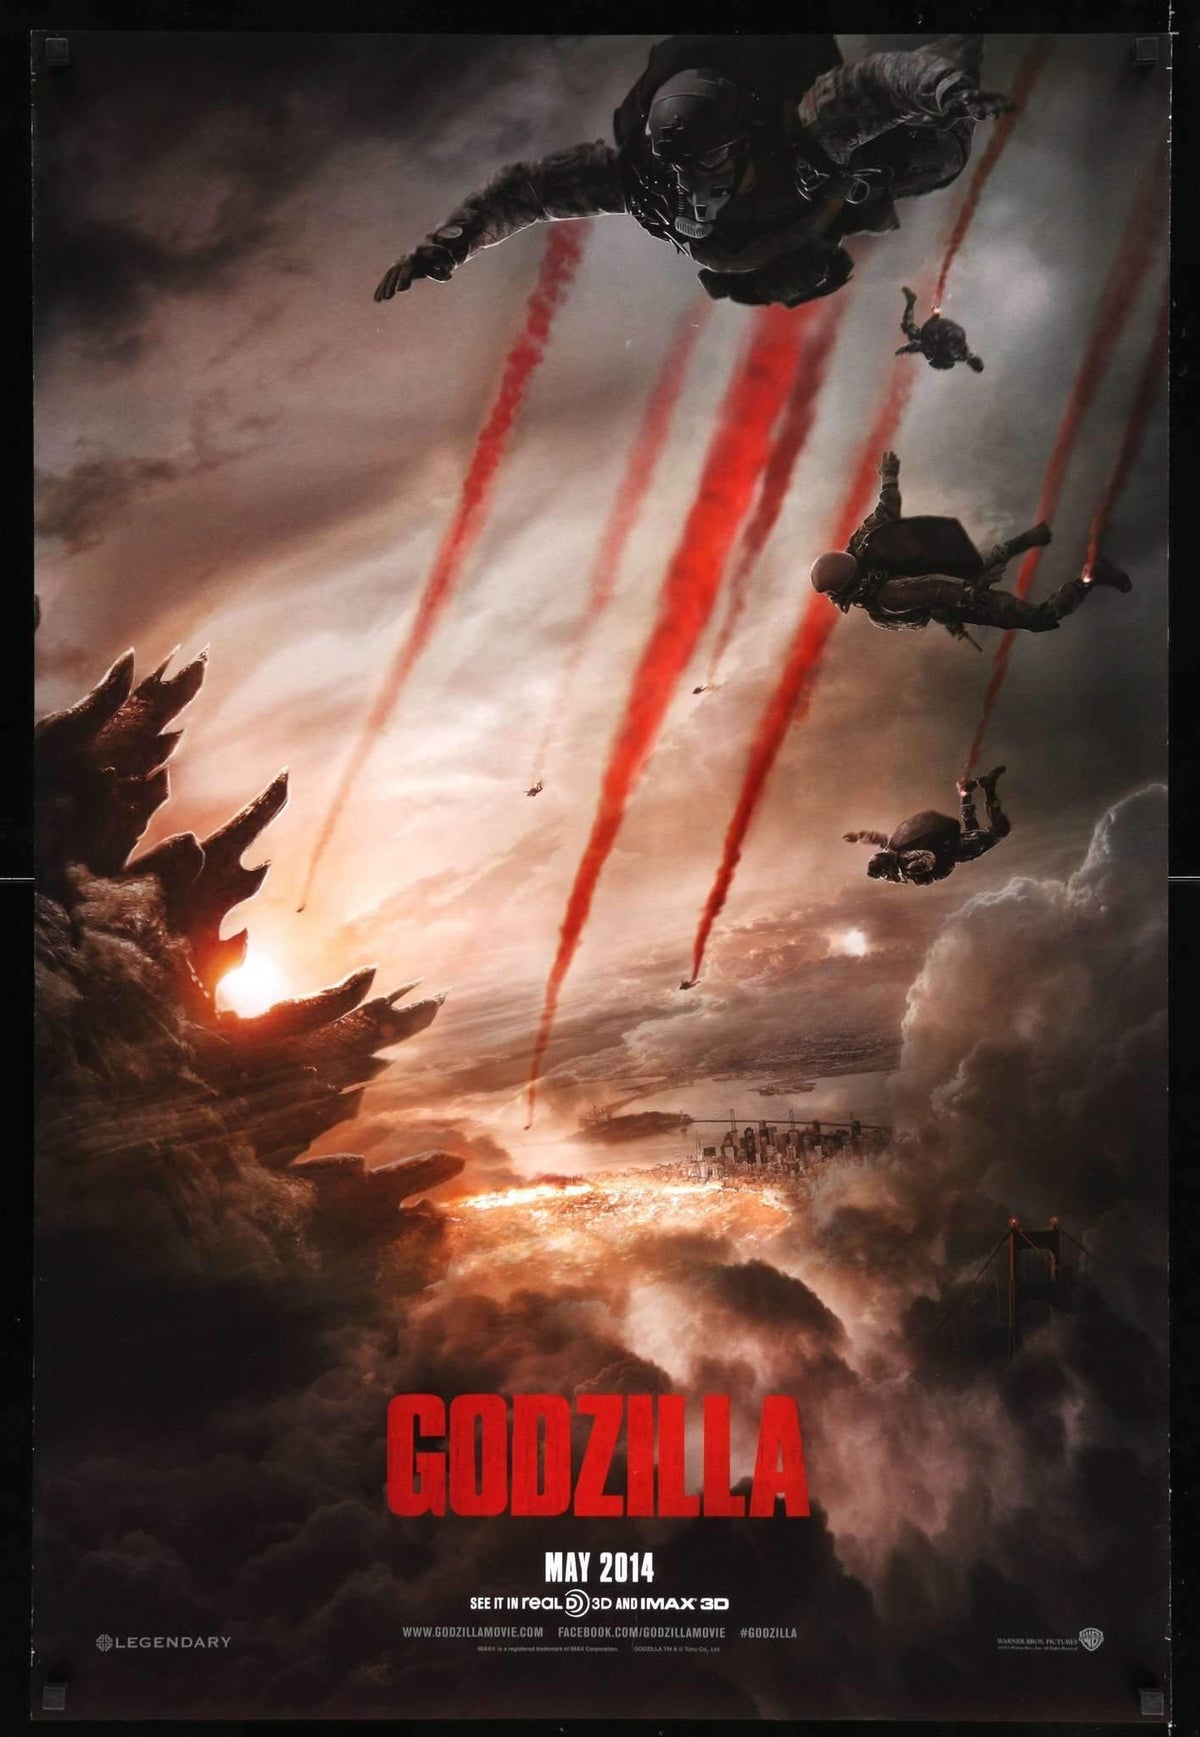 Godzilla (2014) original movie poster for sale at Original Film Art